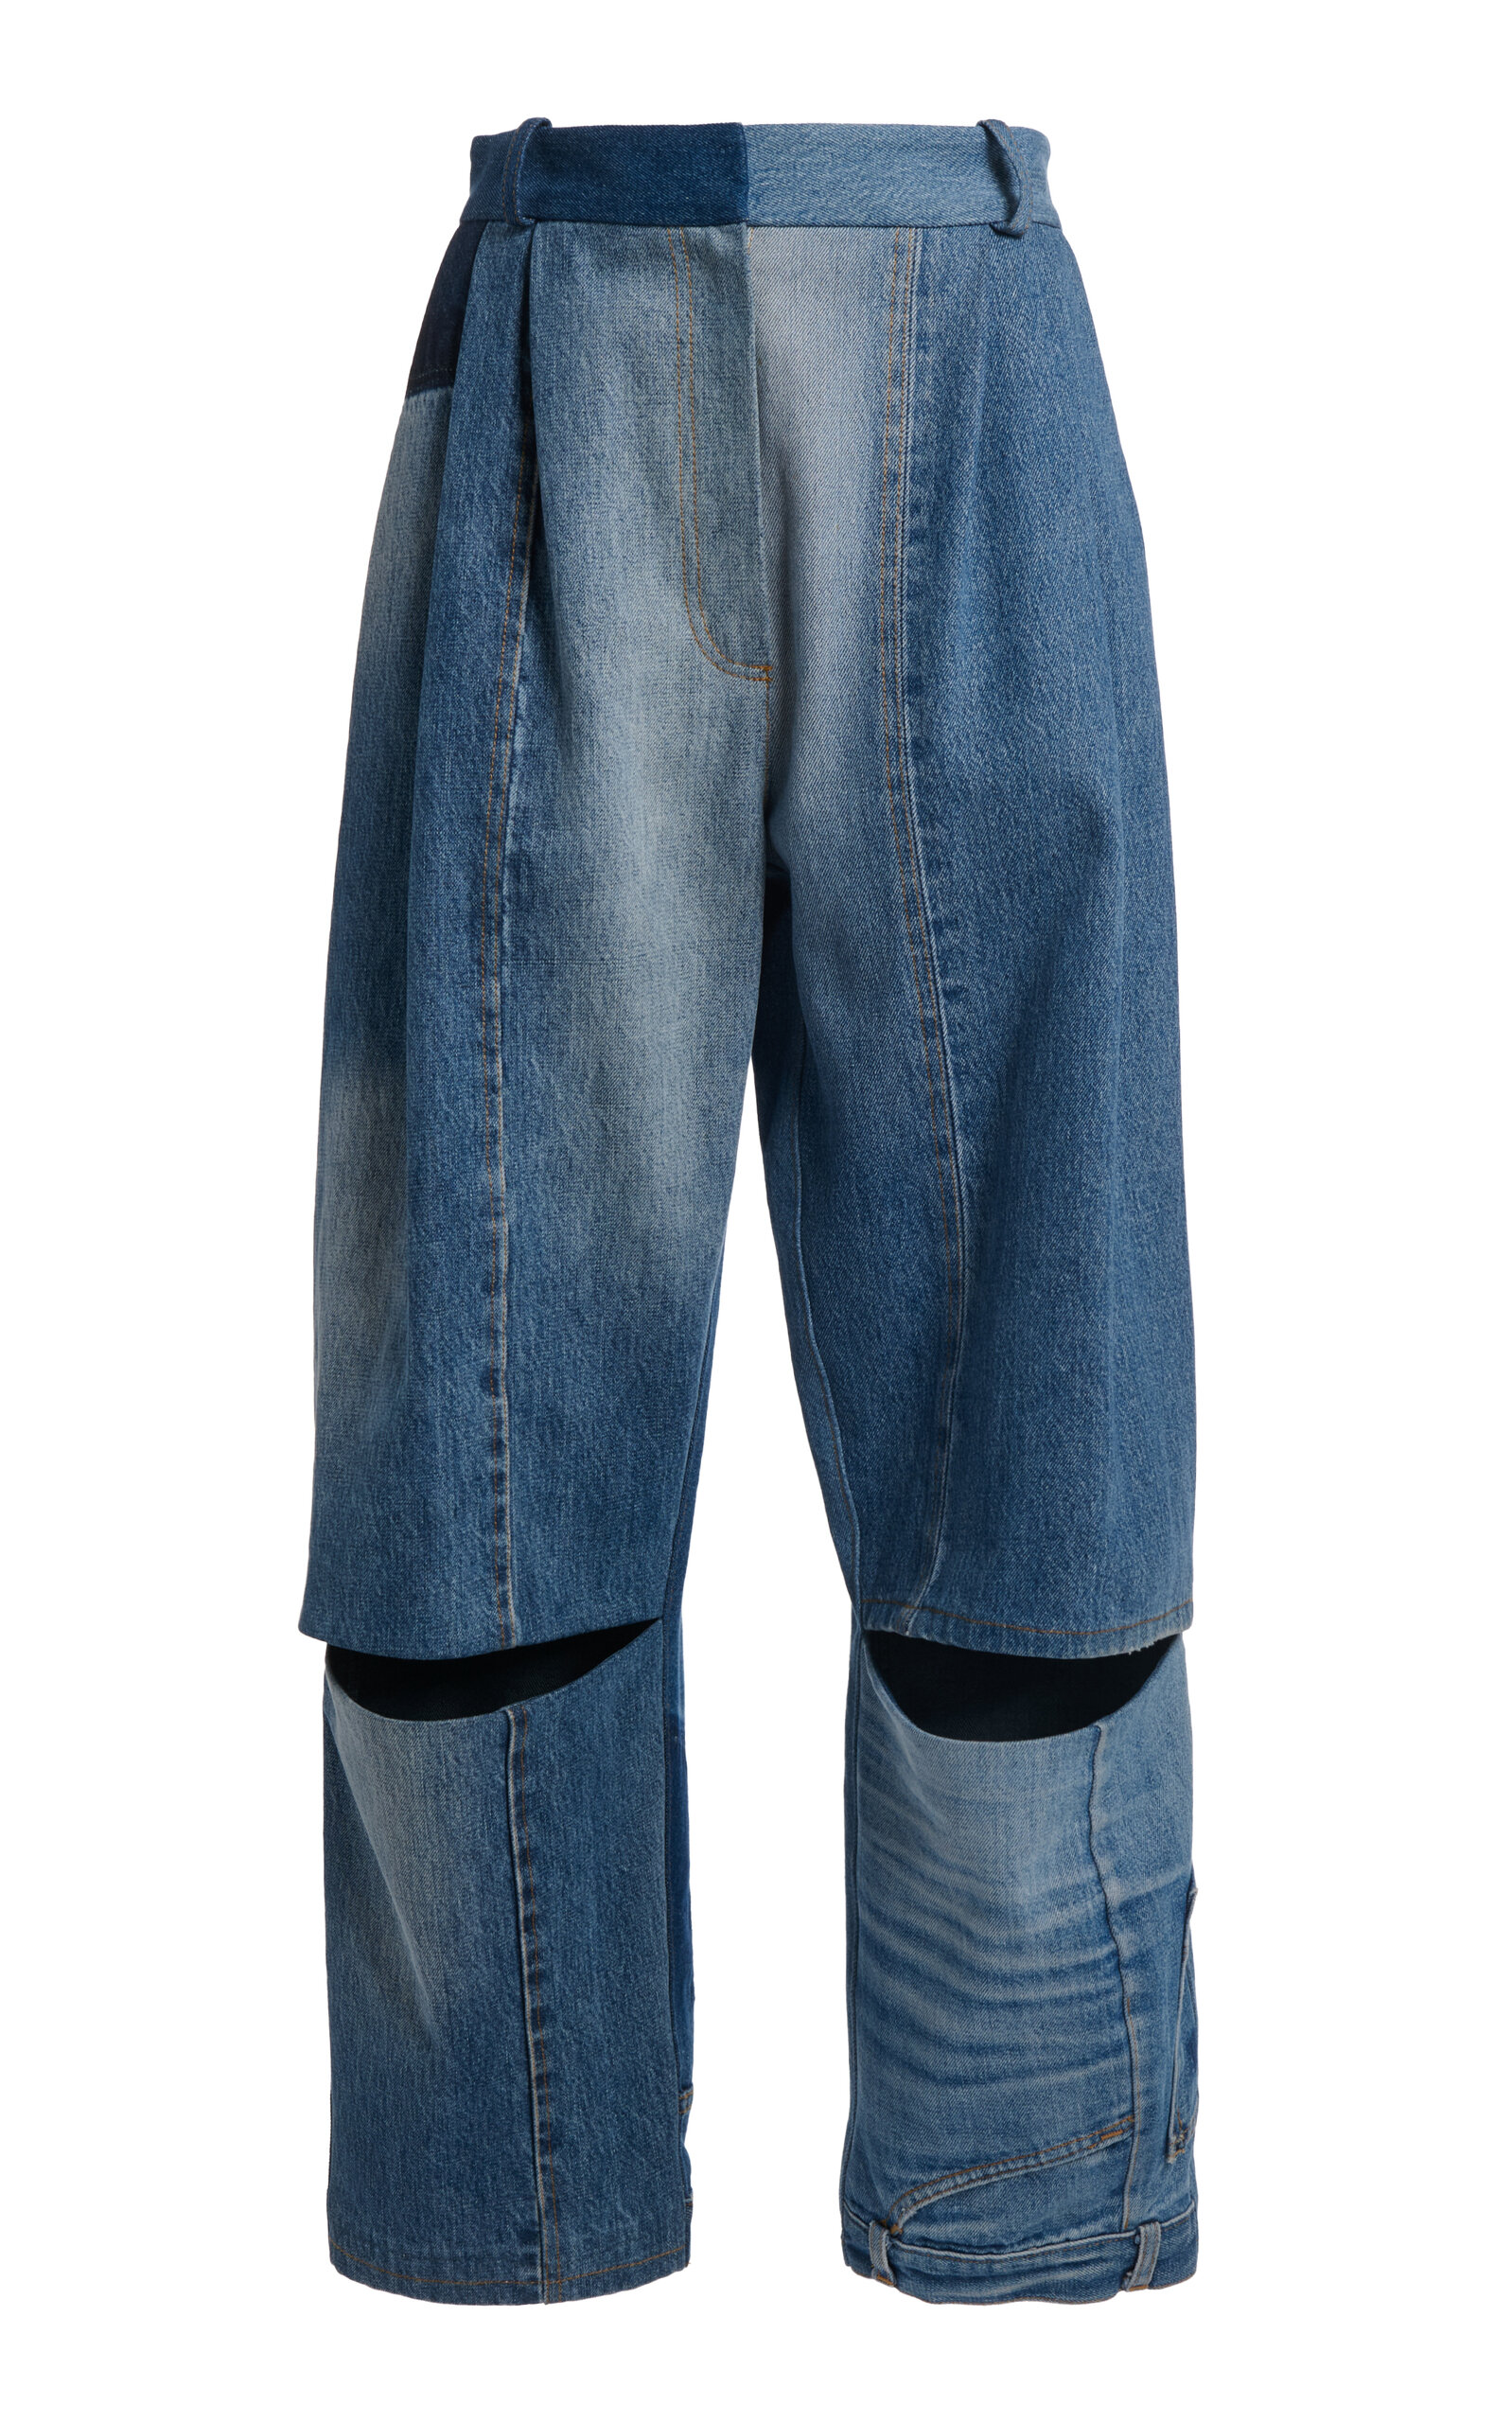 Upcycled Denim Jeans